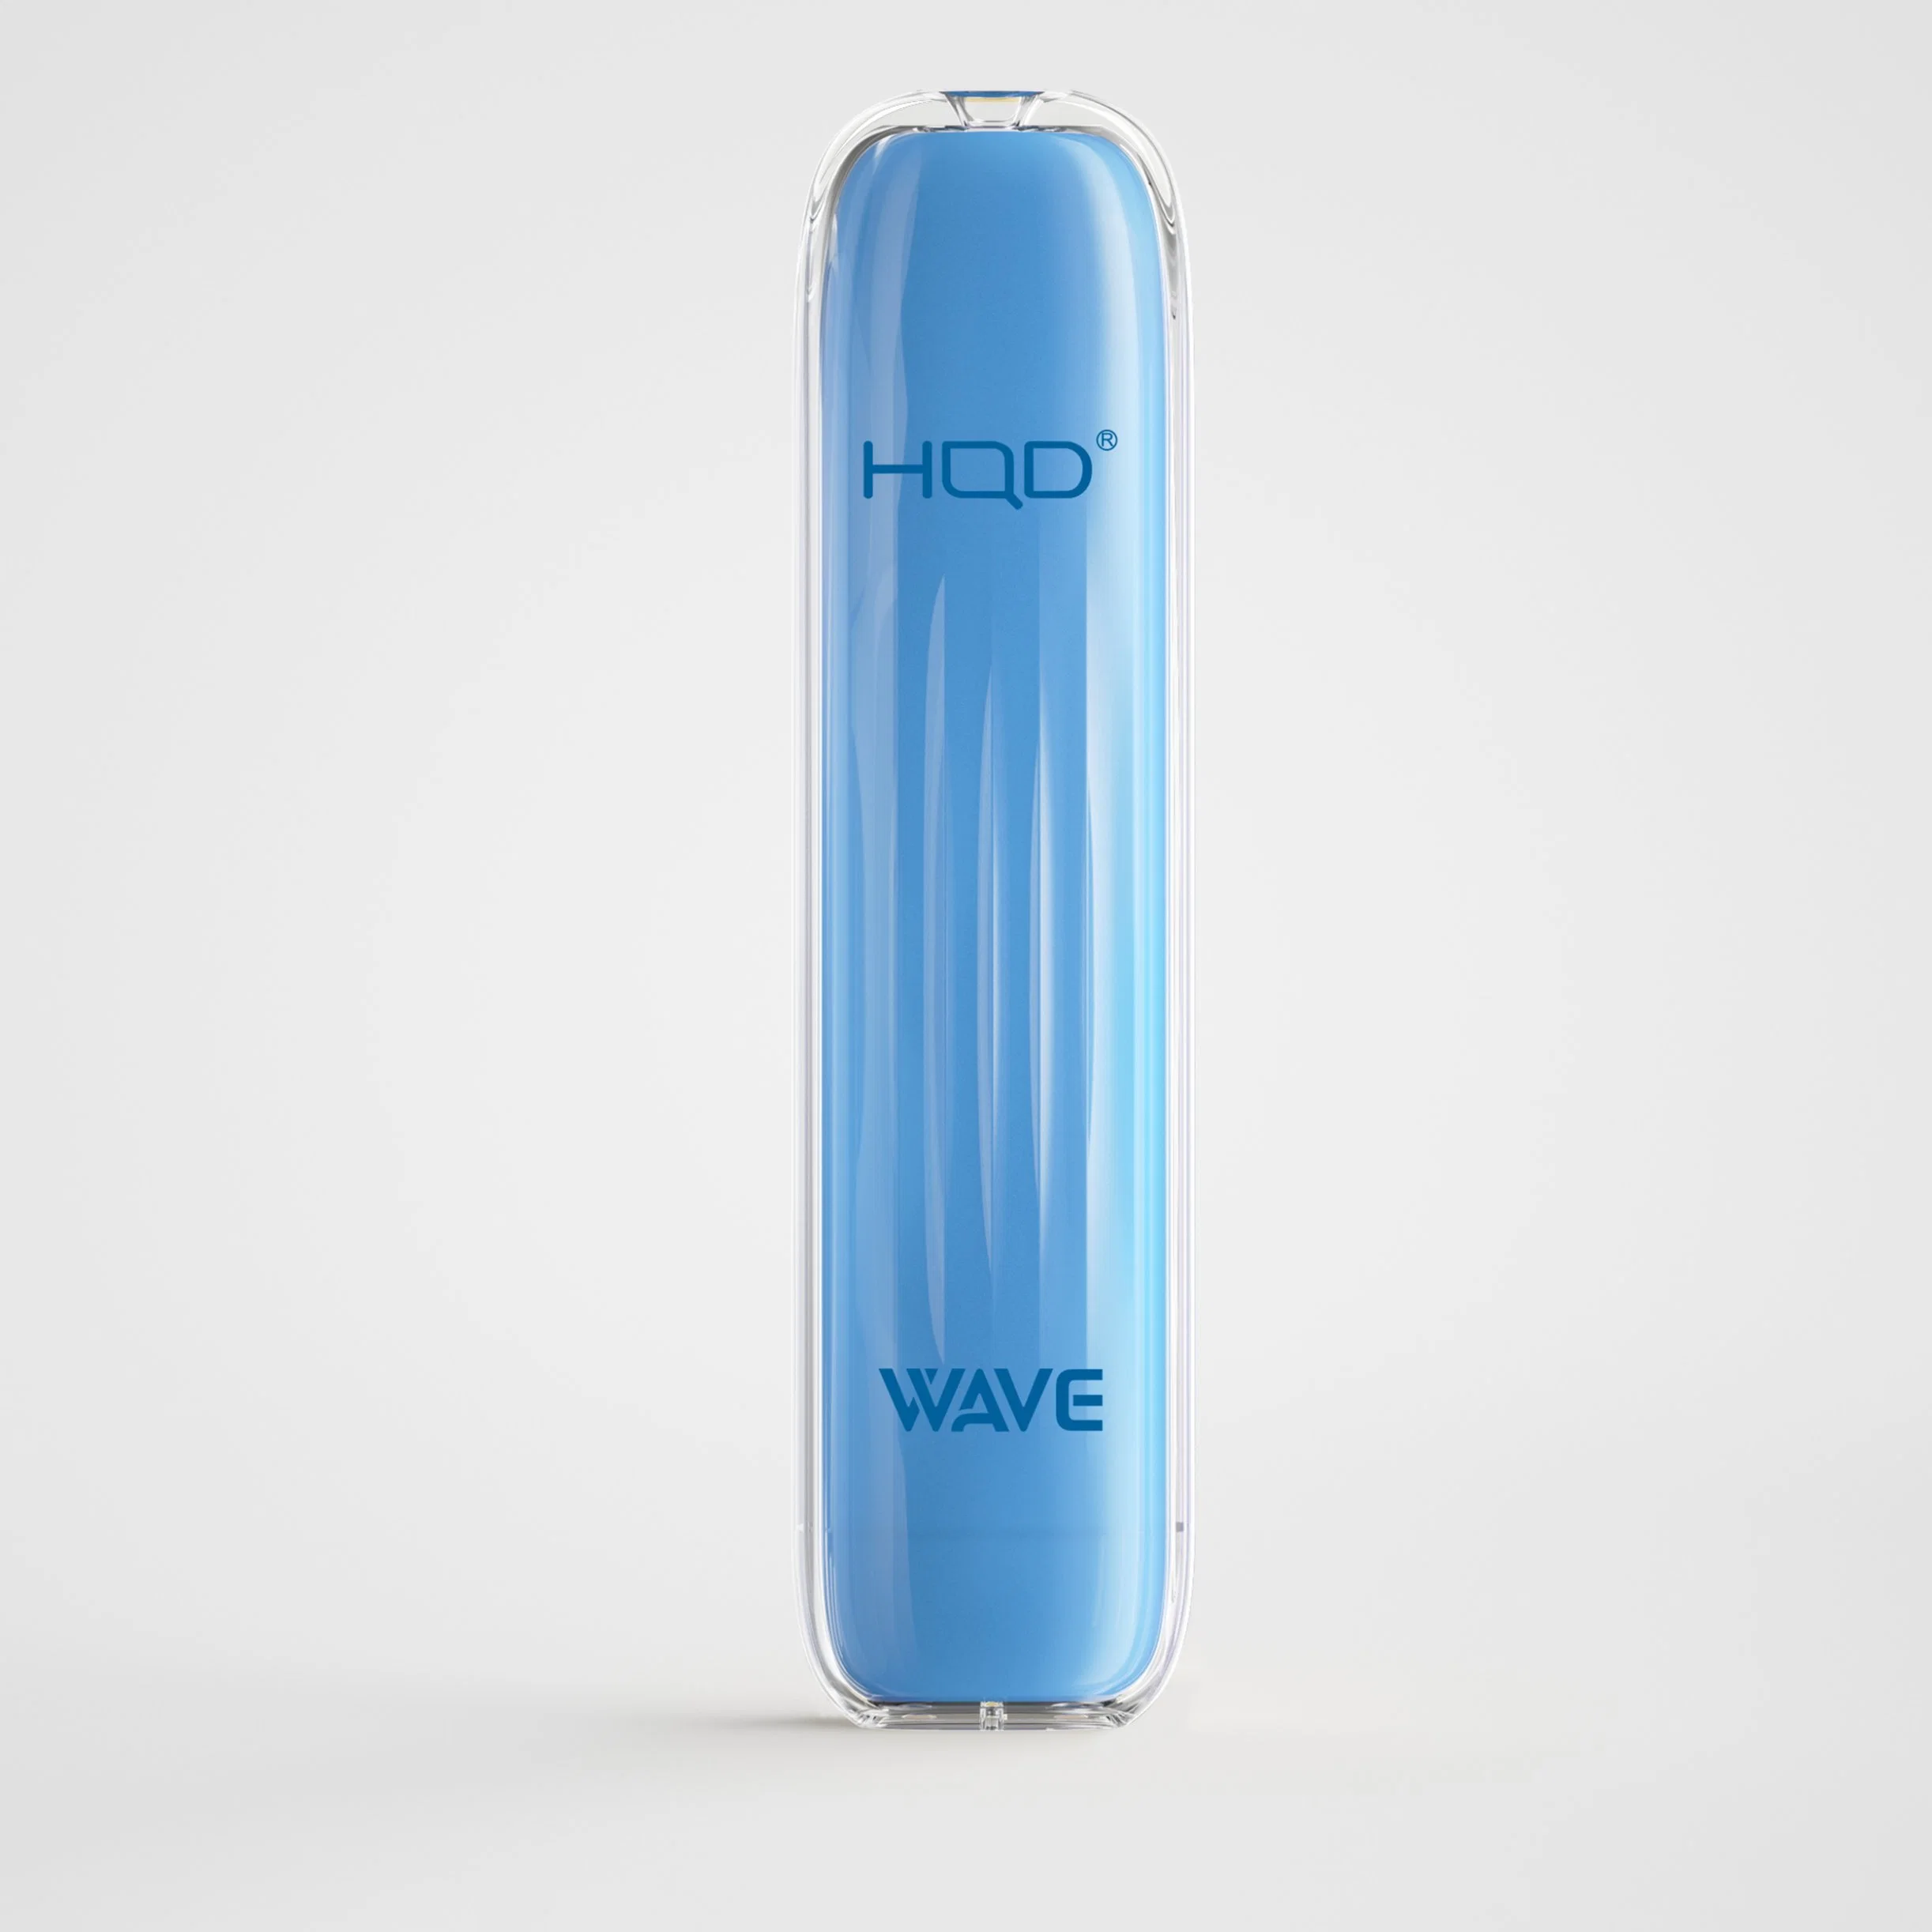 Hqd 600 Puffs E Cigarettes Disposable Vape Pen 2% 20 Colors 500mAh Battery Vaporizer Vapor Kit